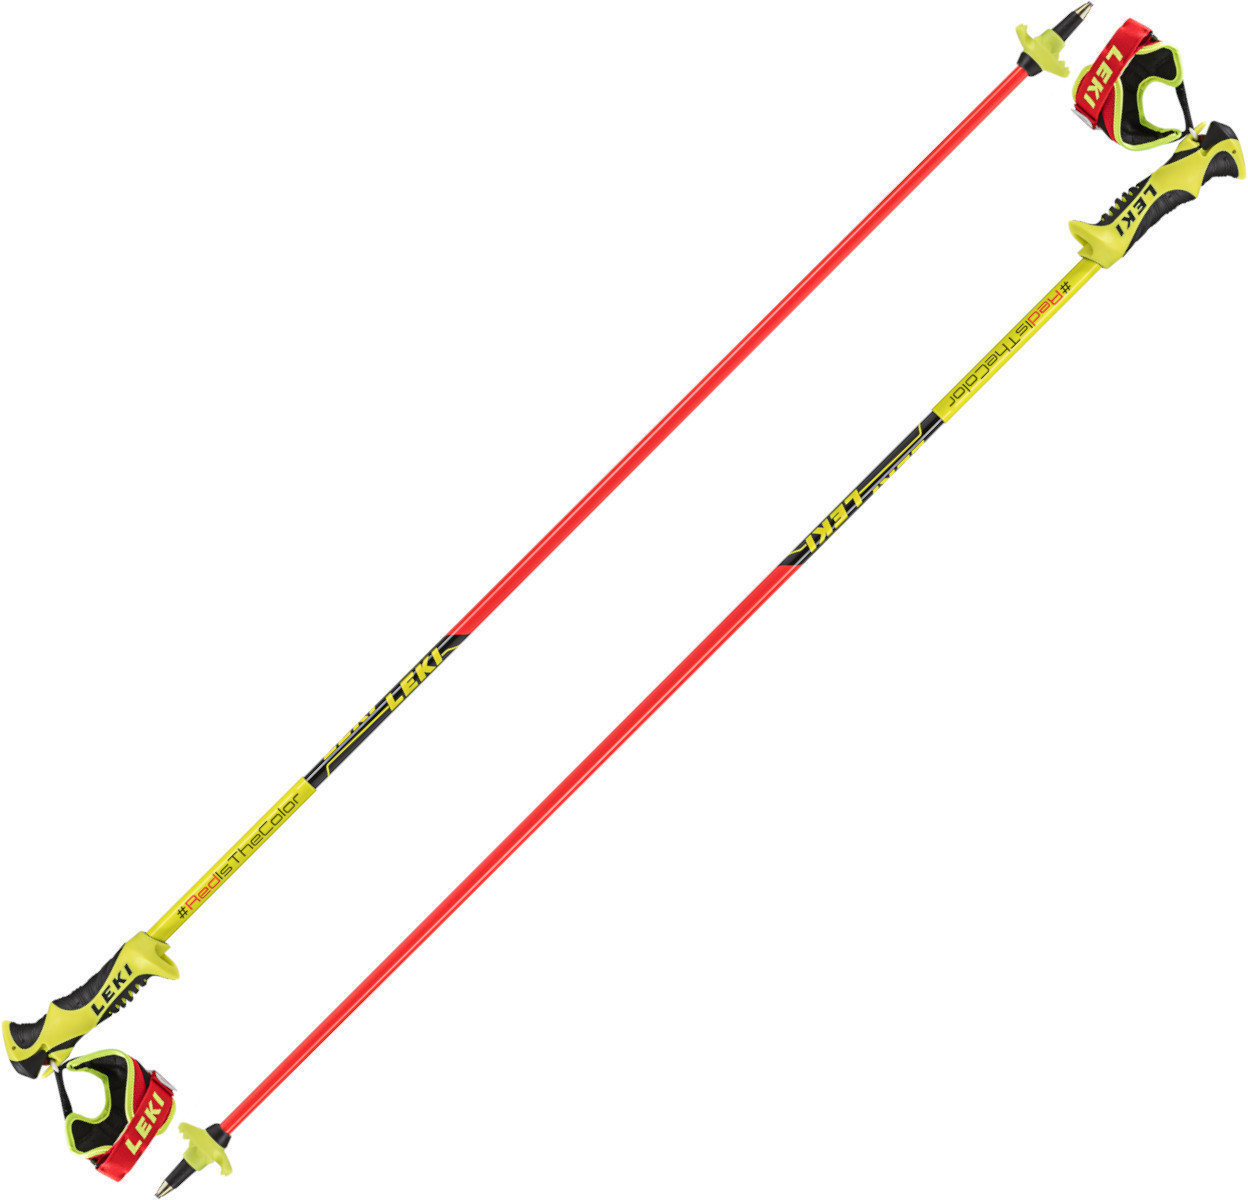 Ski-stokken Leki Worldcup Racing Comp JR Neonred/Neonyellow/Black 115 cm Ski-stokken